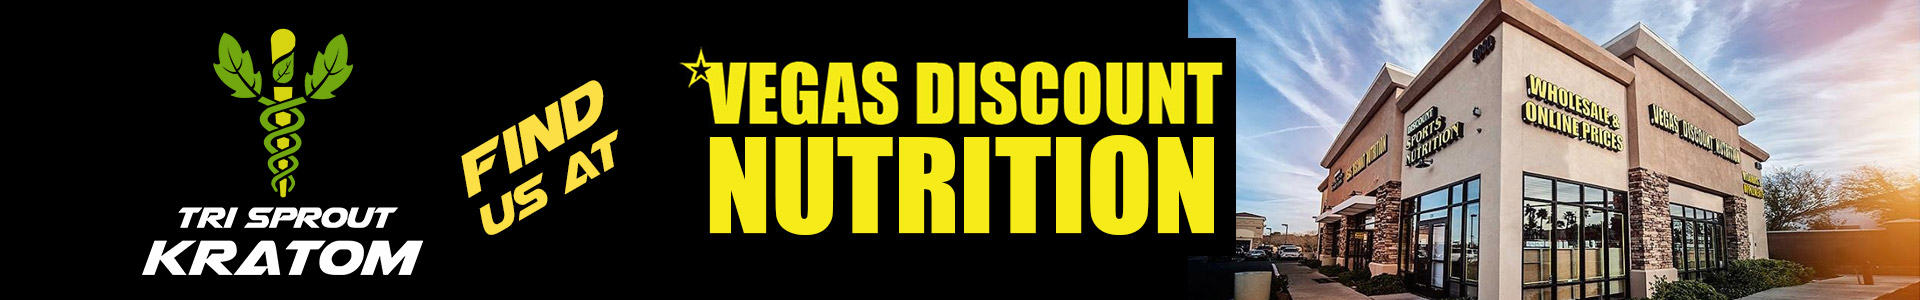 Discount Nutrition Banner